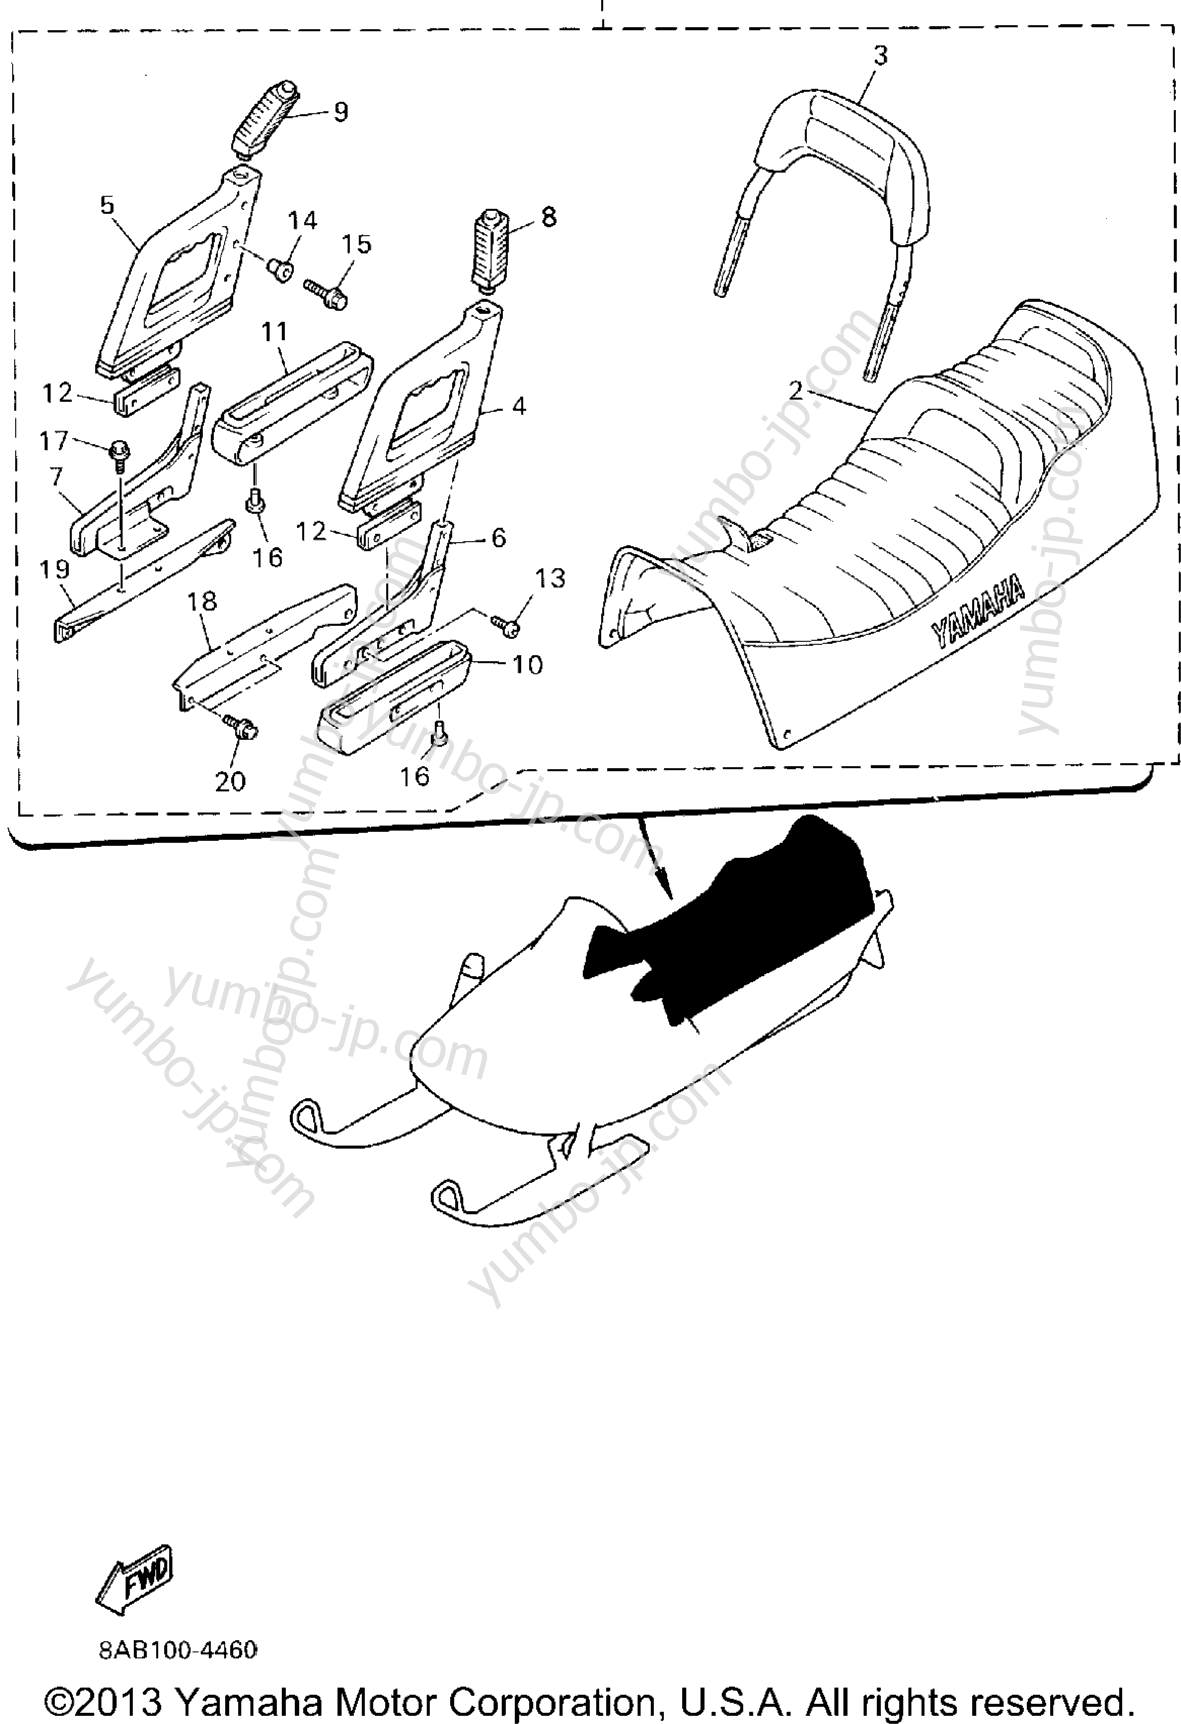 2-Up Seat Kit (Alternate) for snowmobiles YAMAHA VMAX 600 ST (VX600STU) 1994 year